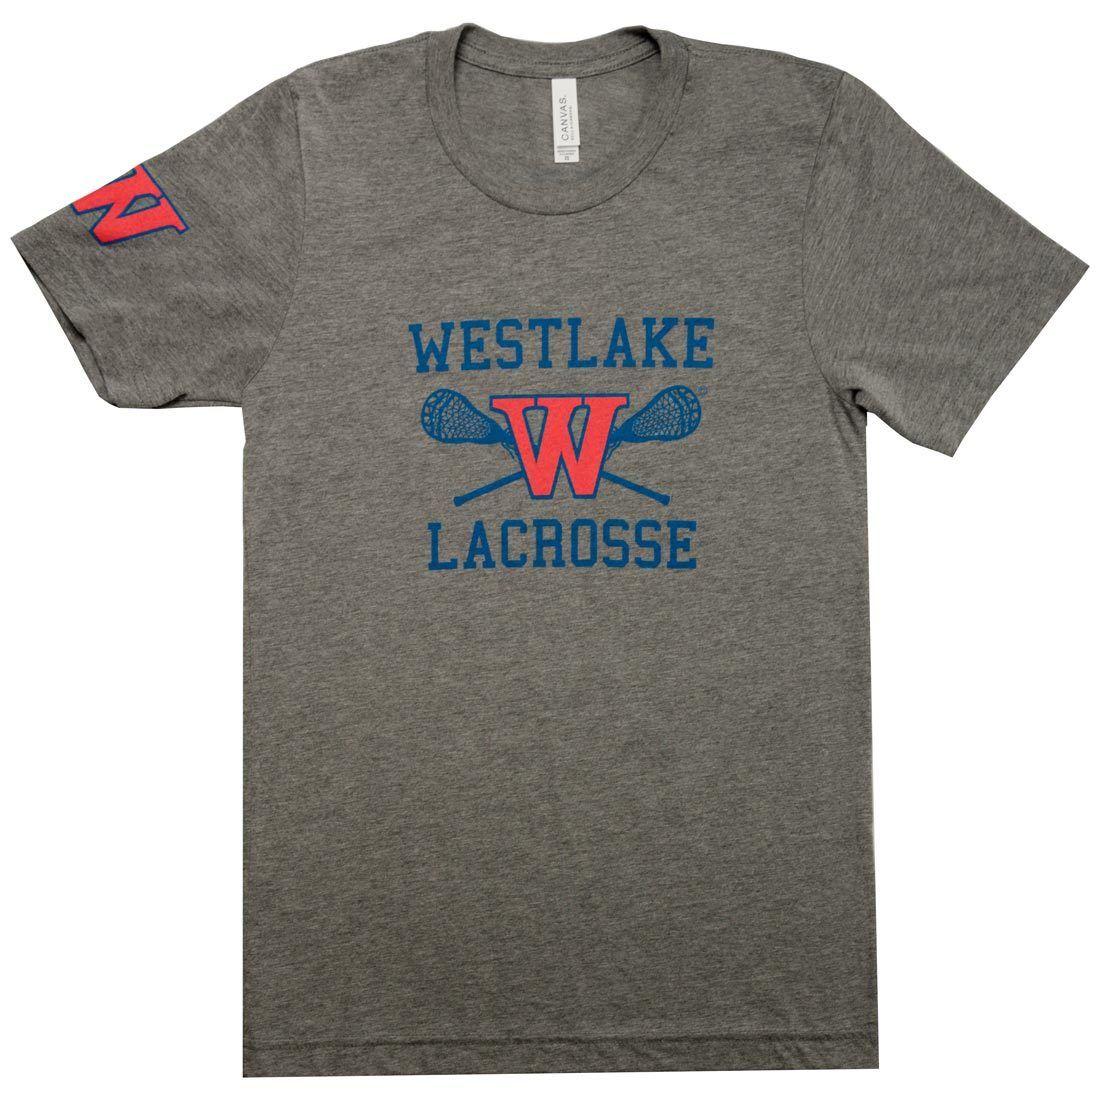 Chaps Clothing Logo - TYLER'S Westlake Chaps Lacrosse Tee